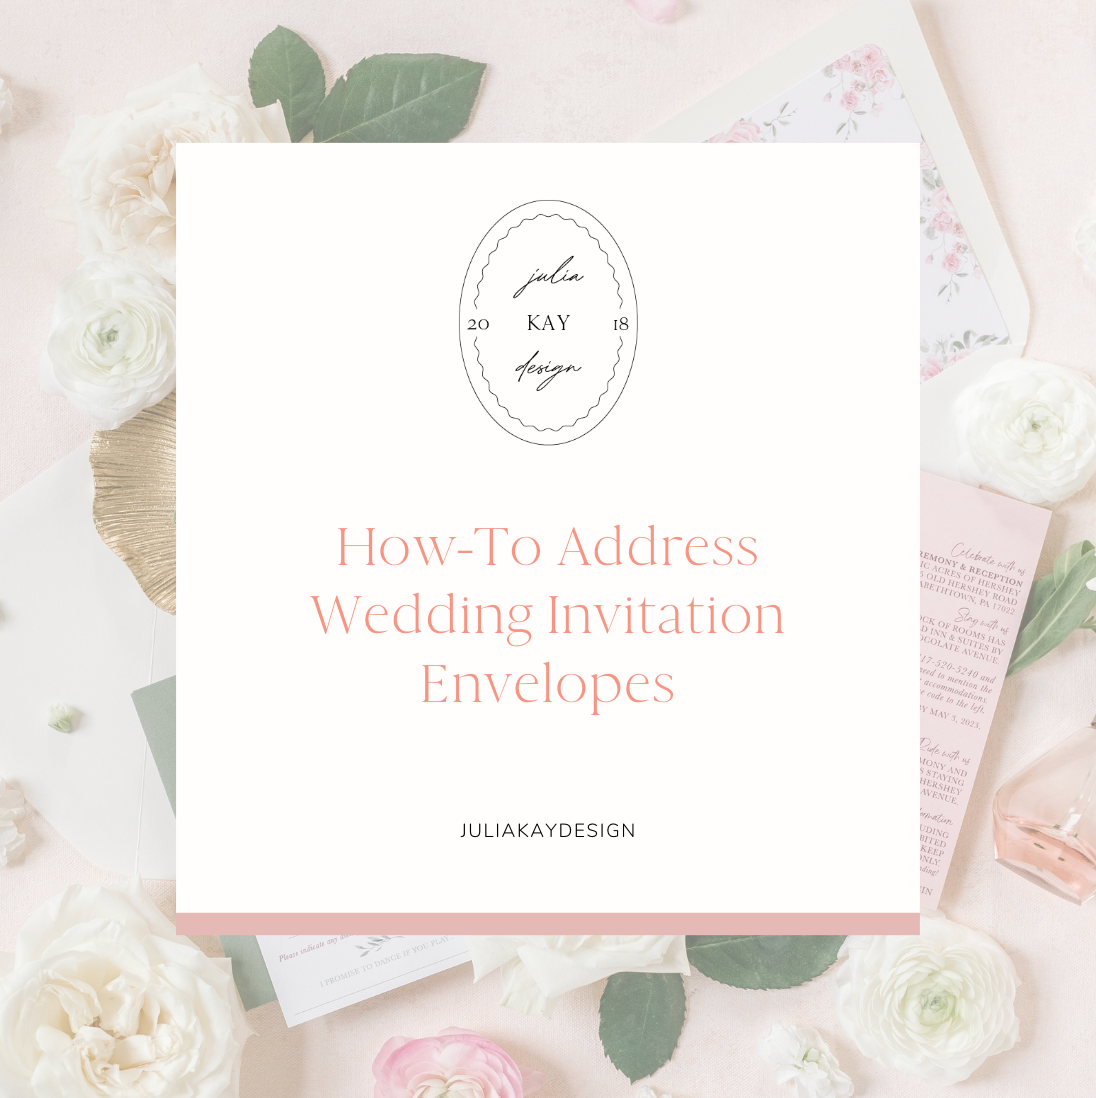 How-To: Addressing Wedding Invitation Envelopes